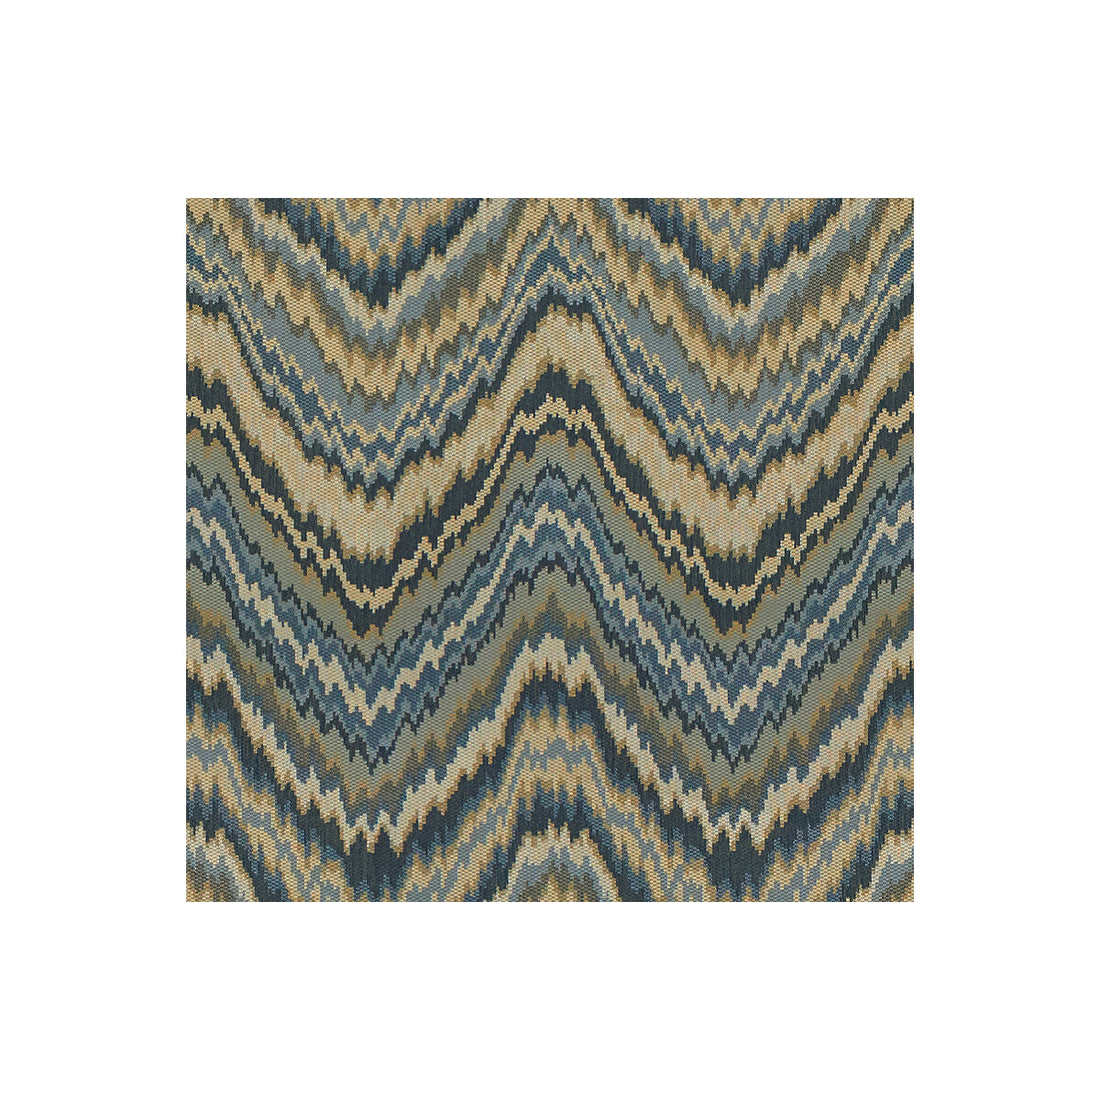 Kravet Design fabric in 33441-516 color - pattern 33441.516.0 - by Kravet Design in the Inspirations collection